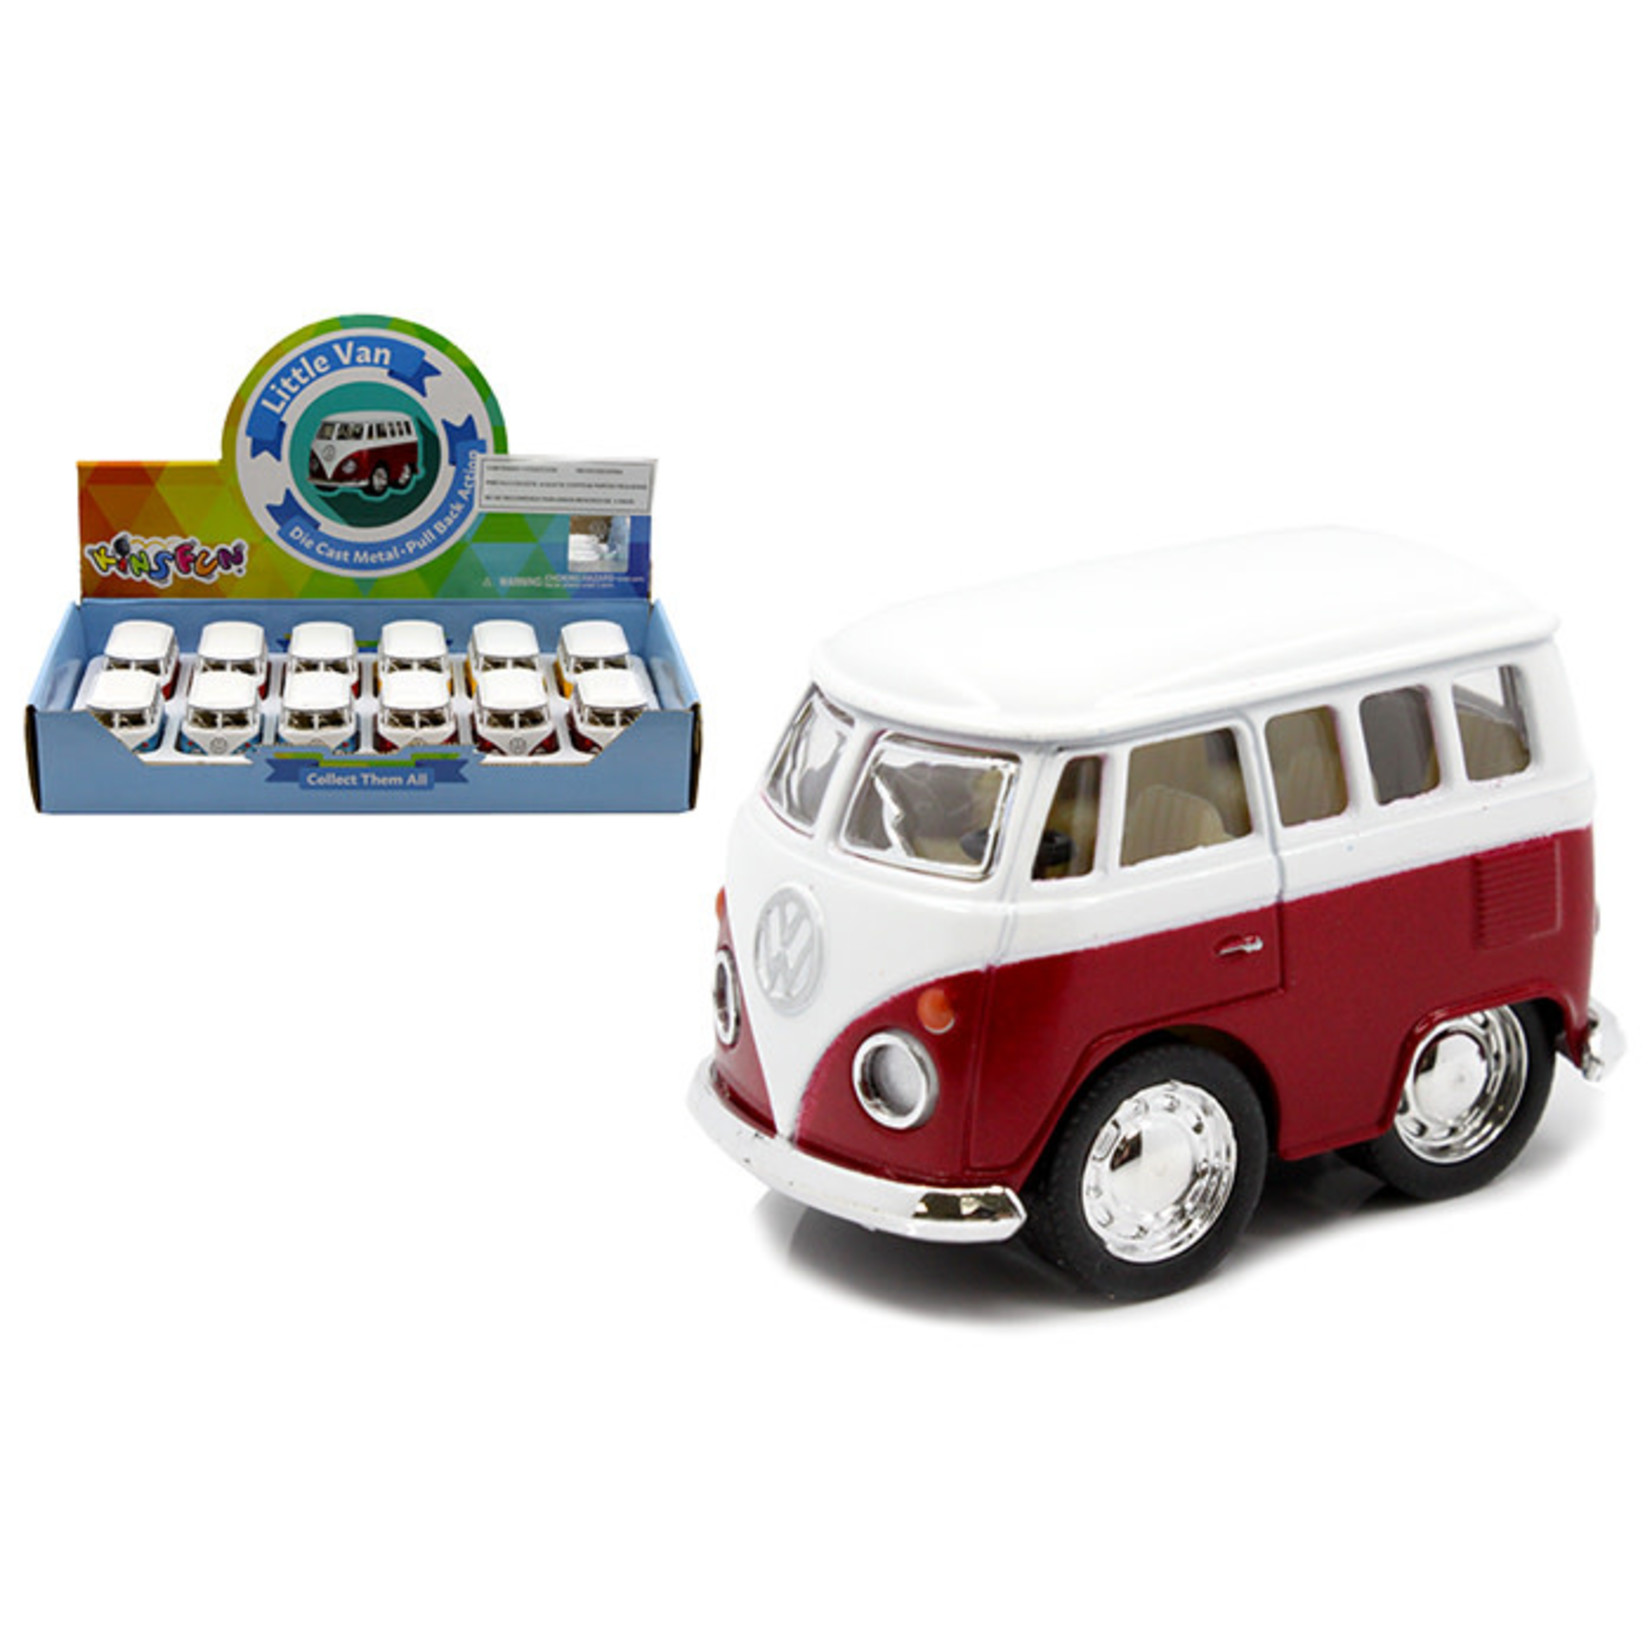 Kinsmart VW 2" Little Van Micro Bus